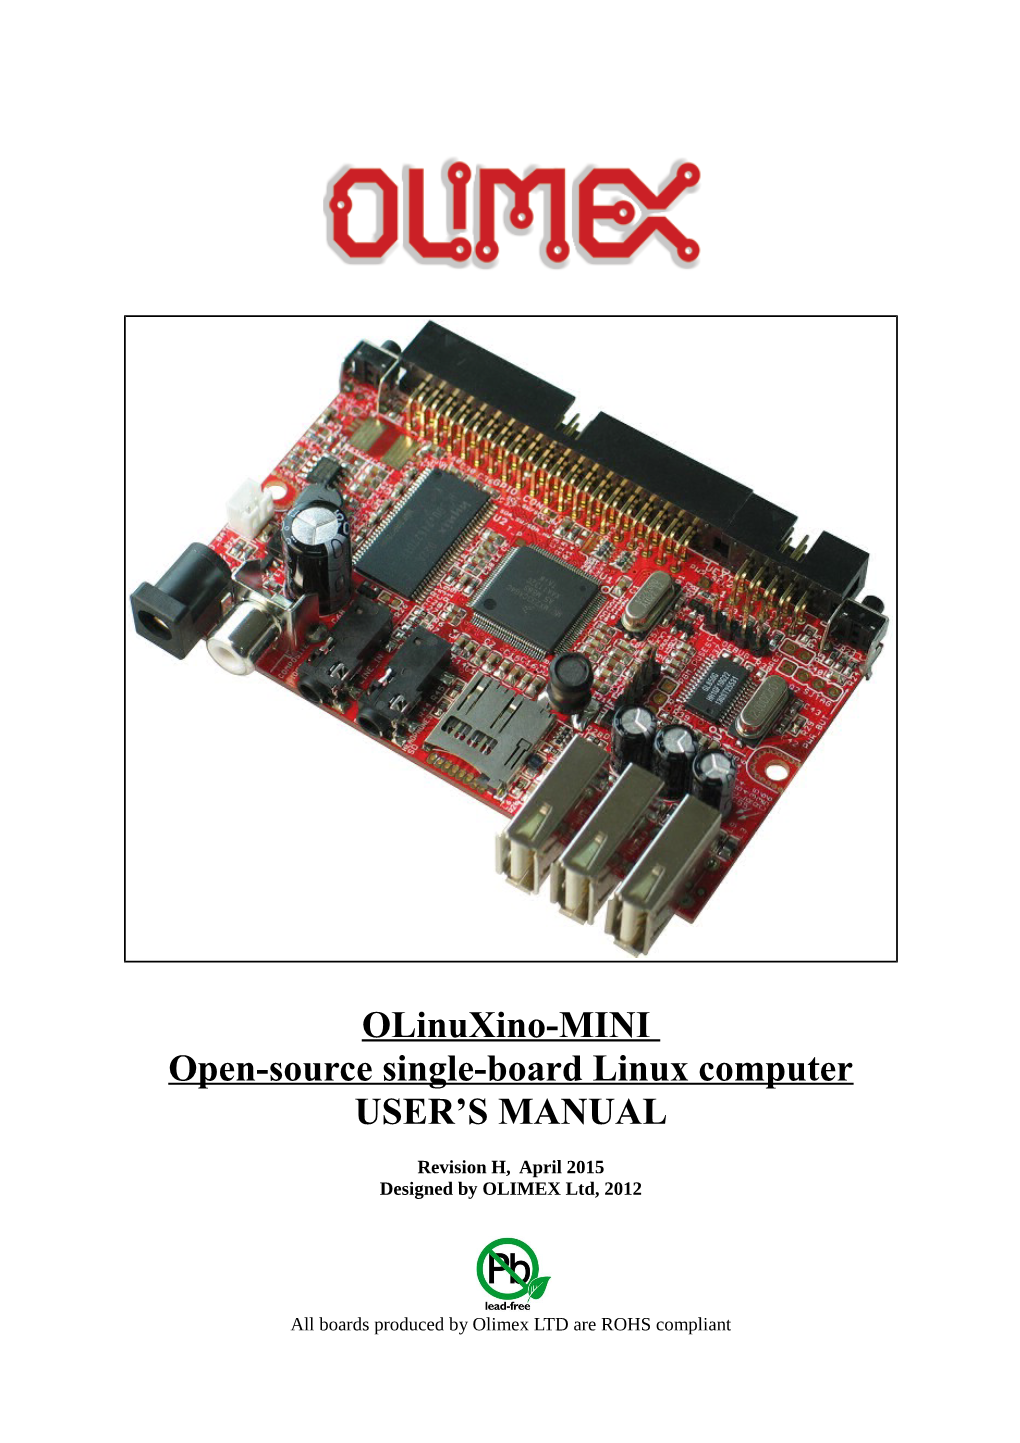 IMX233-Olinuxino-MINI User's Manual